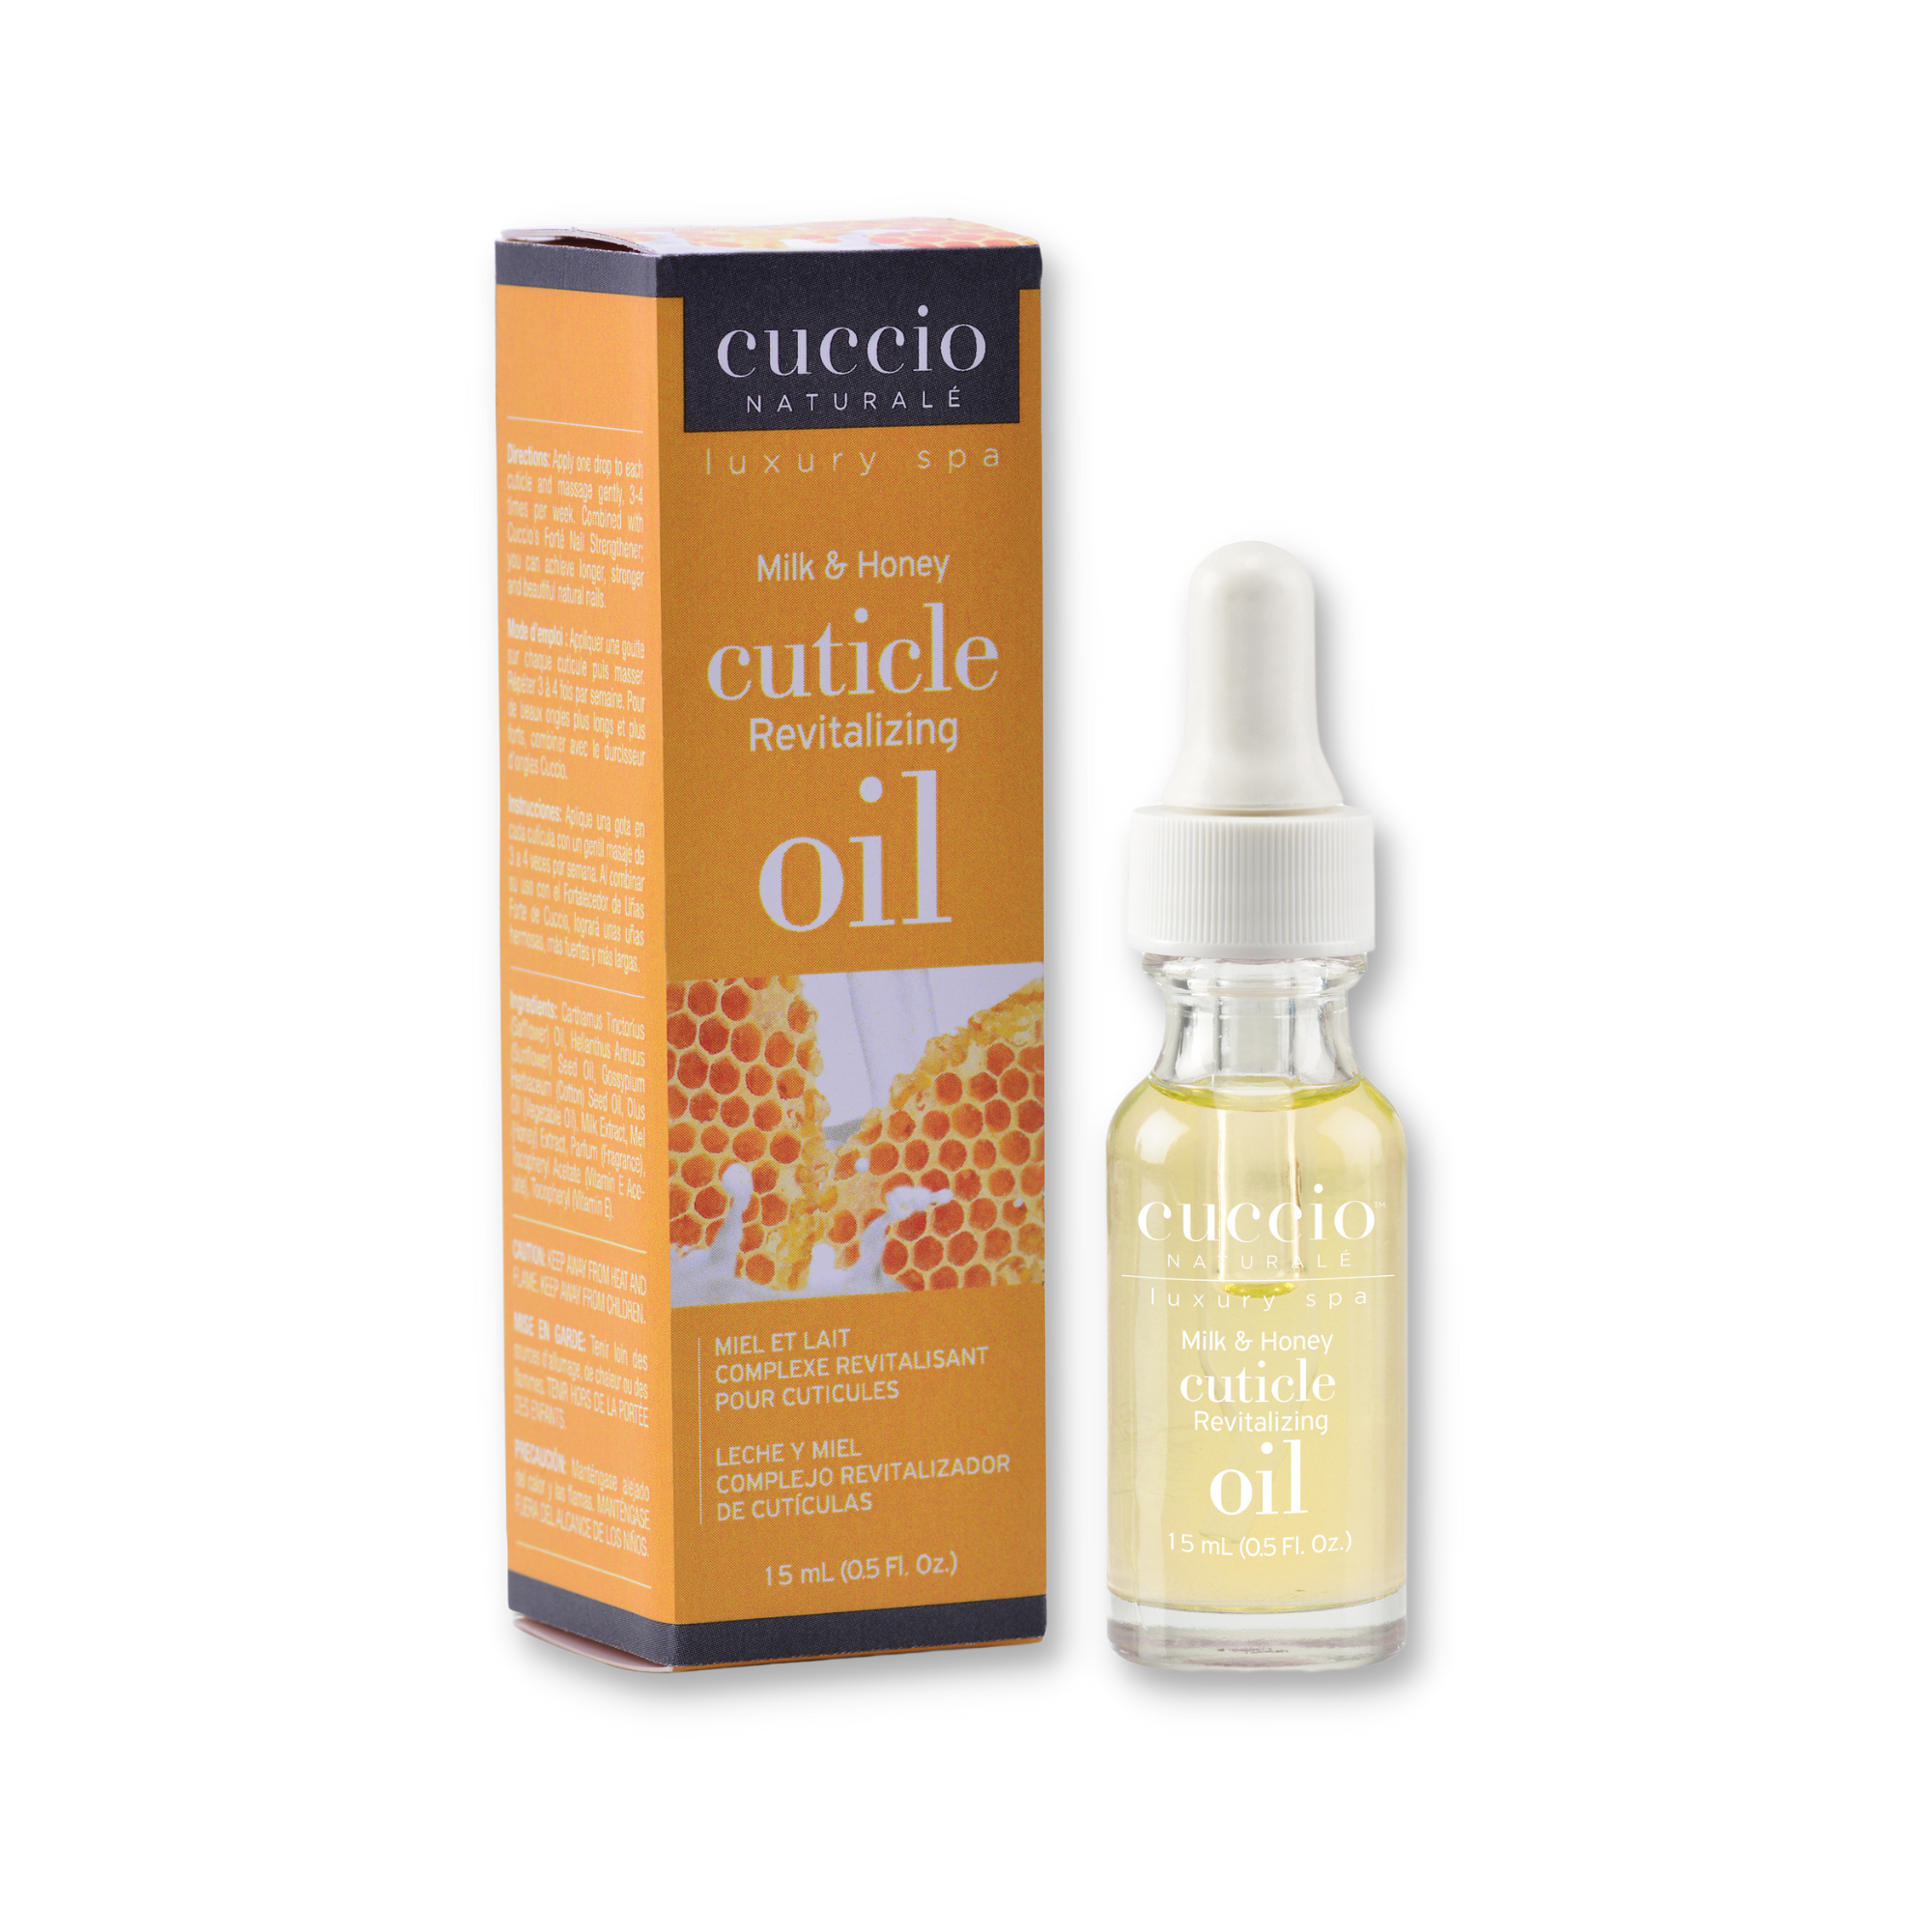 Cuccio Naturalé Cuticle Revitalizing Oil - Milk & Honey